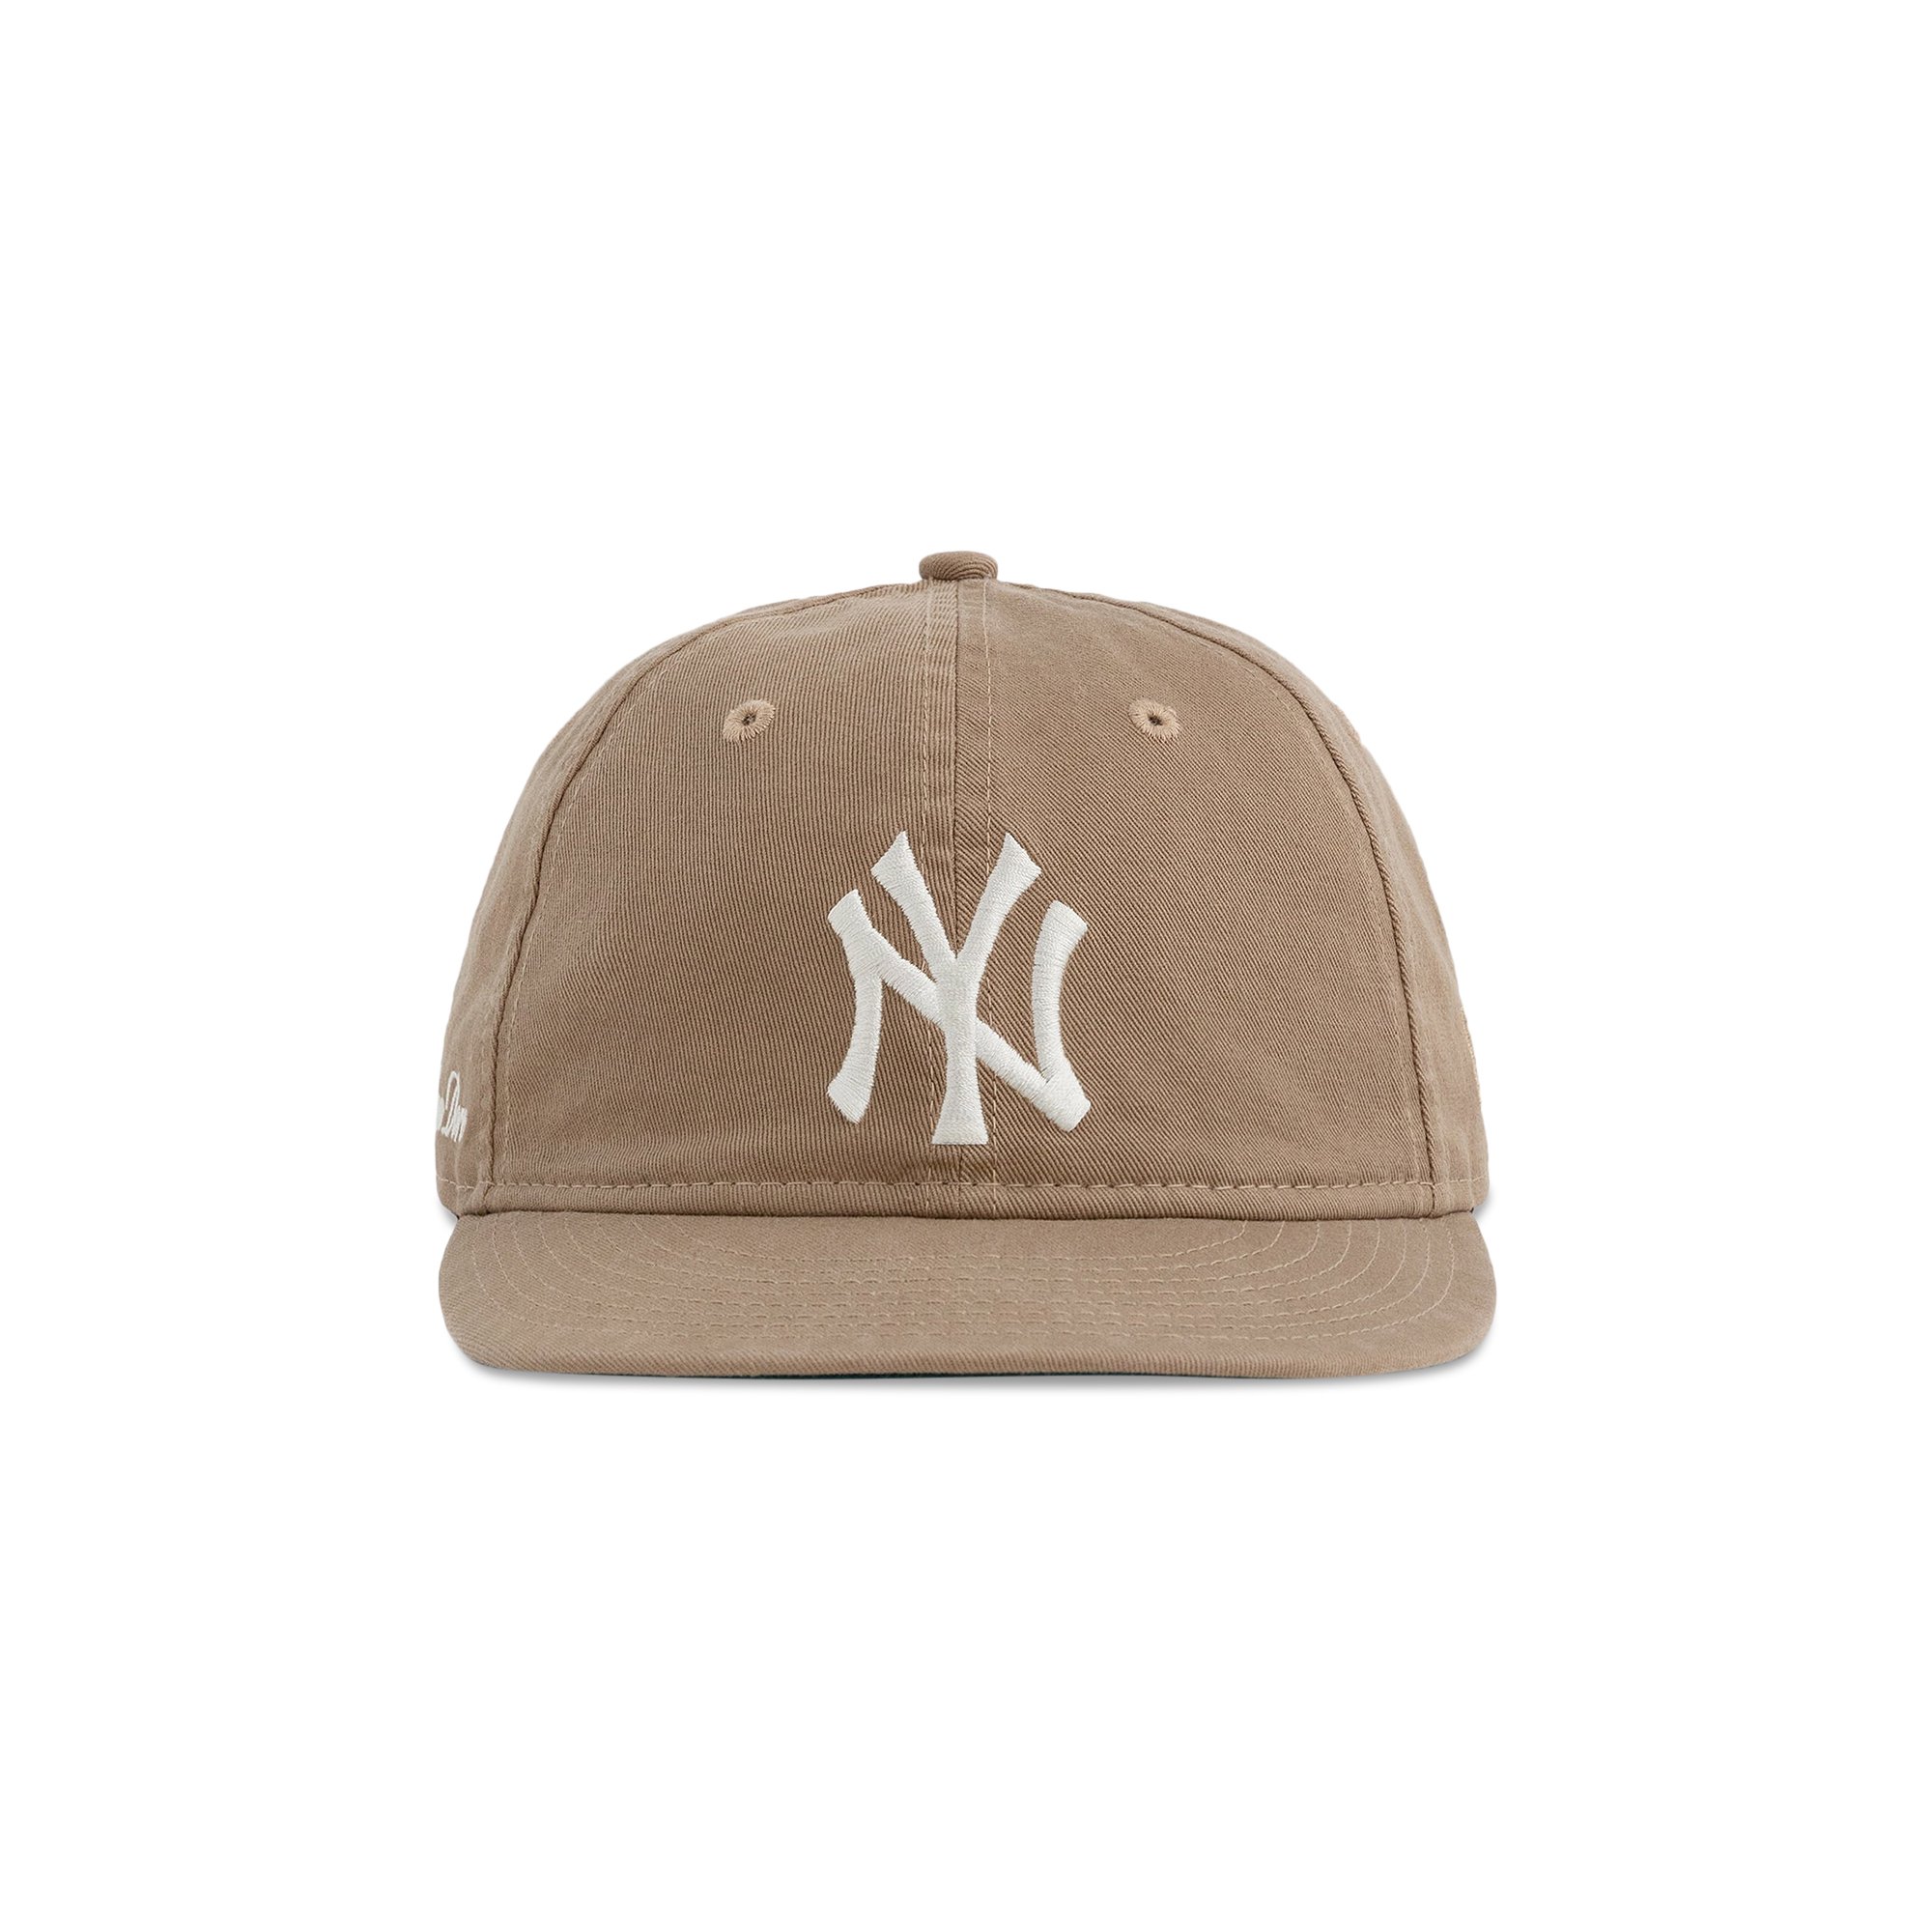 Aimé Leon Dore x New Era Washed Chino Yankees Hat 'Khaki' | GOAT